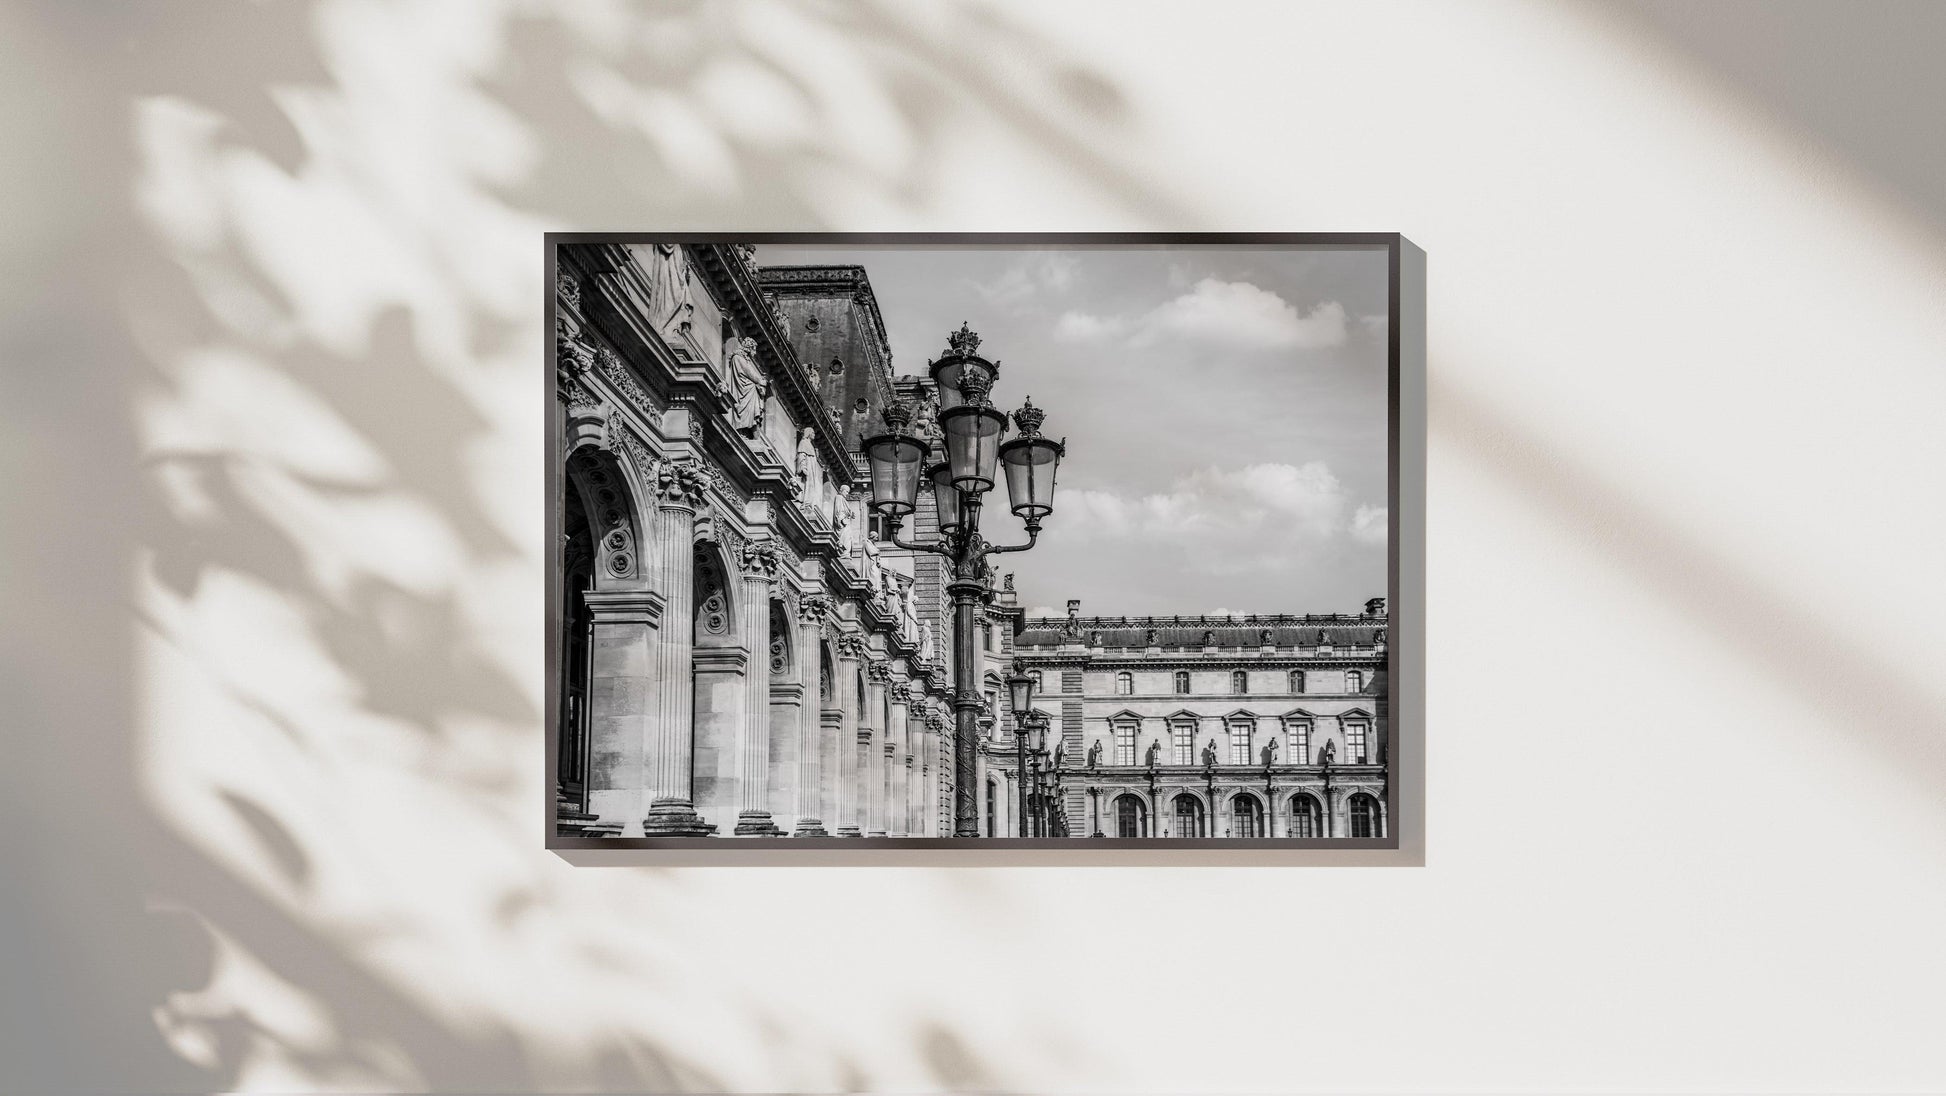 Black and White Louvre Museum Lamp Posts | Paris Photography Print - Departures Print Shop